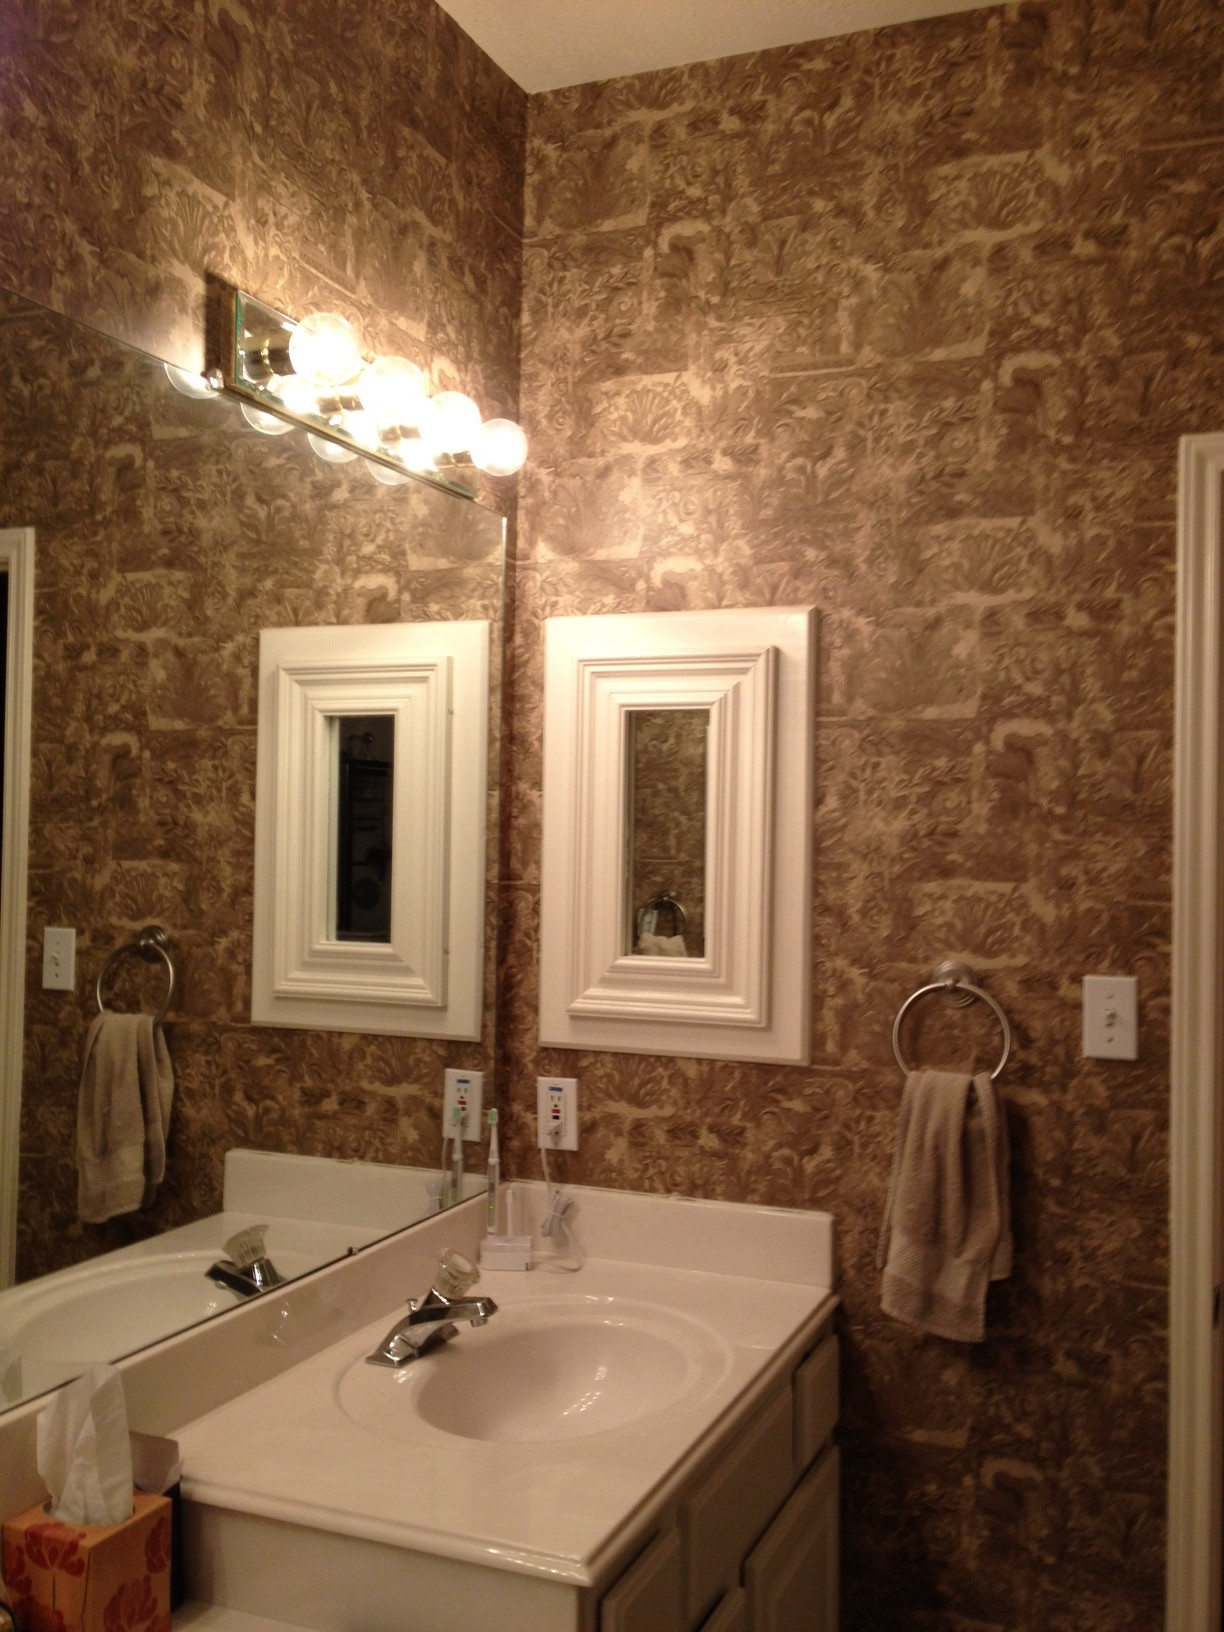 Vinyl Bathroom Wallpaper
 Master bathroom wallpaper HELP vinyl paint sand color